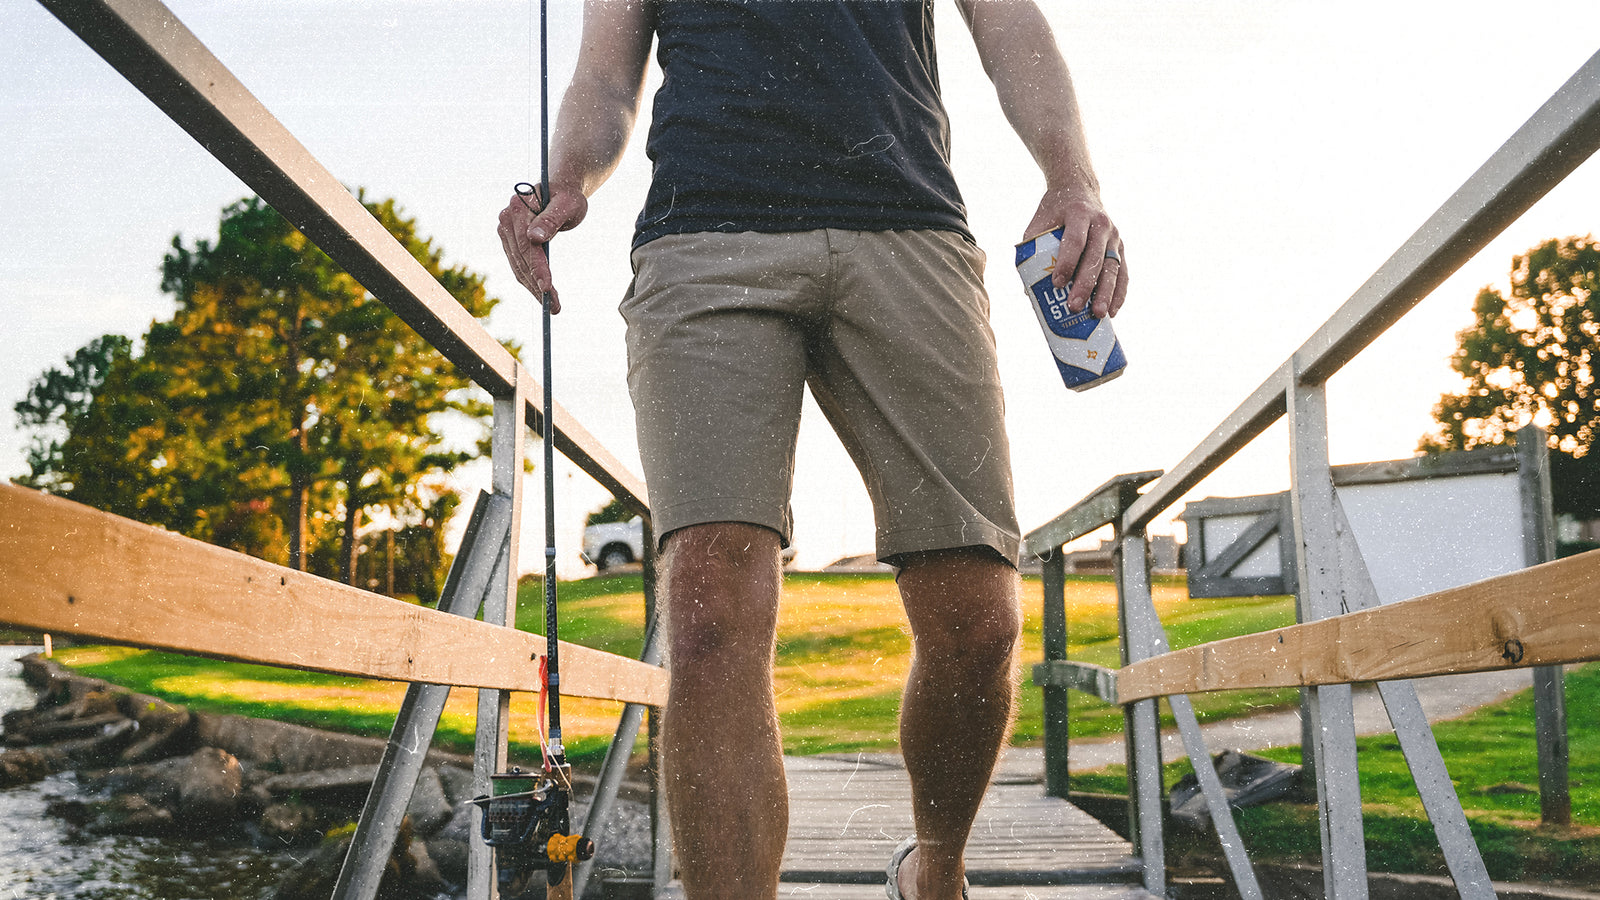 Men's Sports Shorts With Zip Pockets – Guts Fishing Apparel